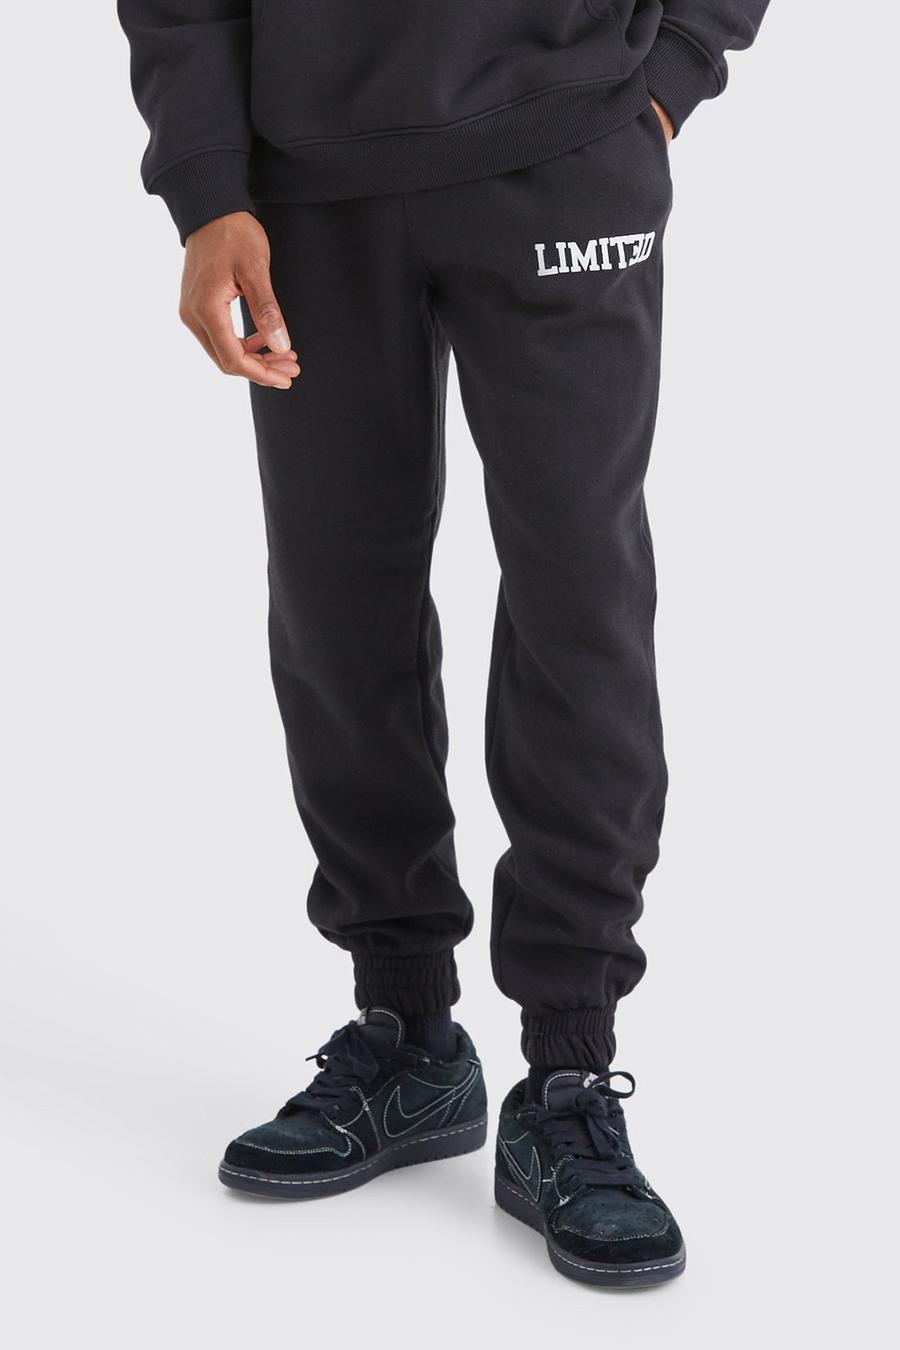 Pantaloni tuta Regular Fit Limited, Black image number 1